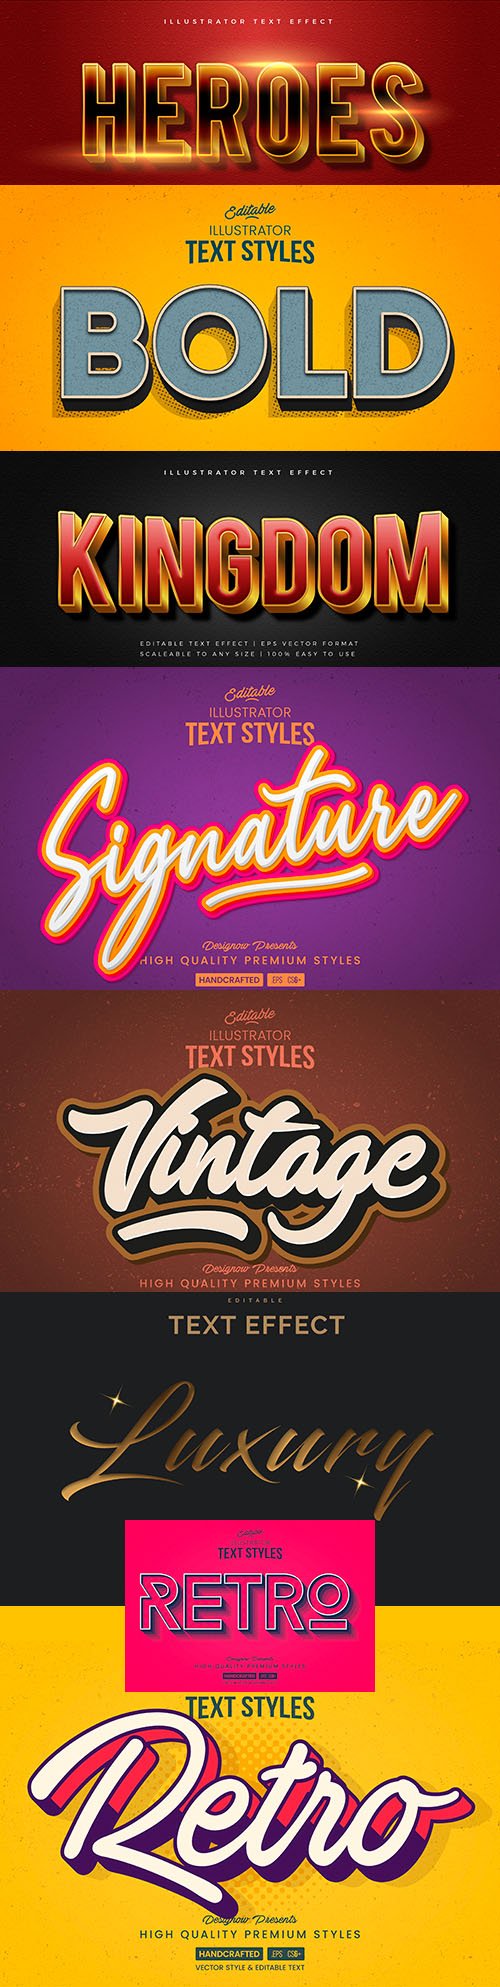 Editable font effect text collection illustration design 210